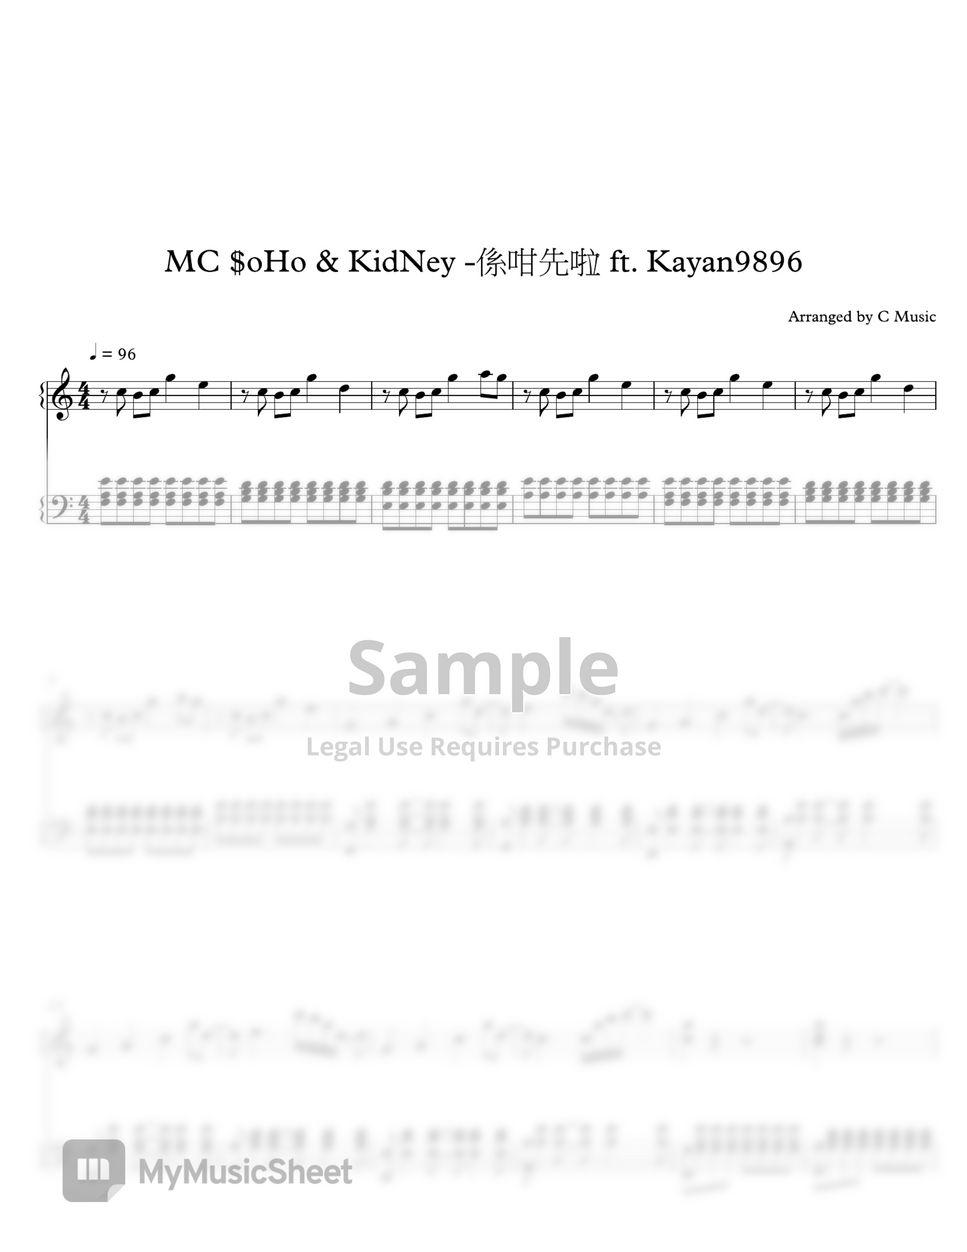 MC $oHo & KidNey, ft Kayan9896 - 係咁先啦 by C Music